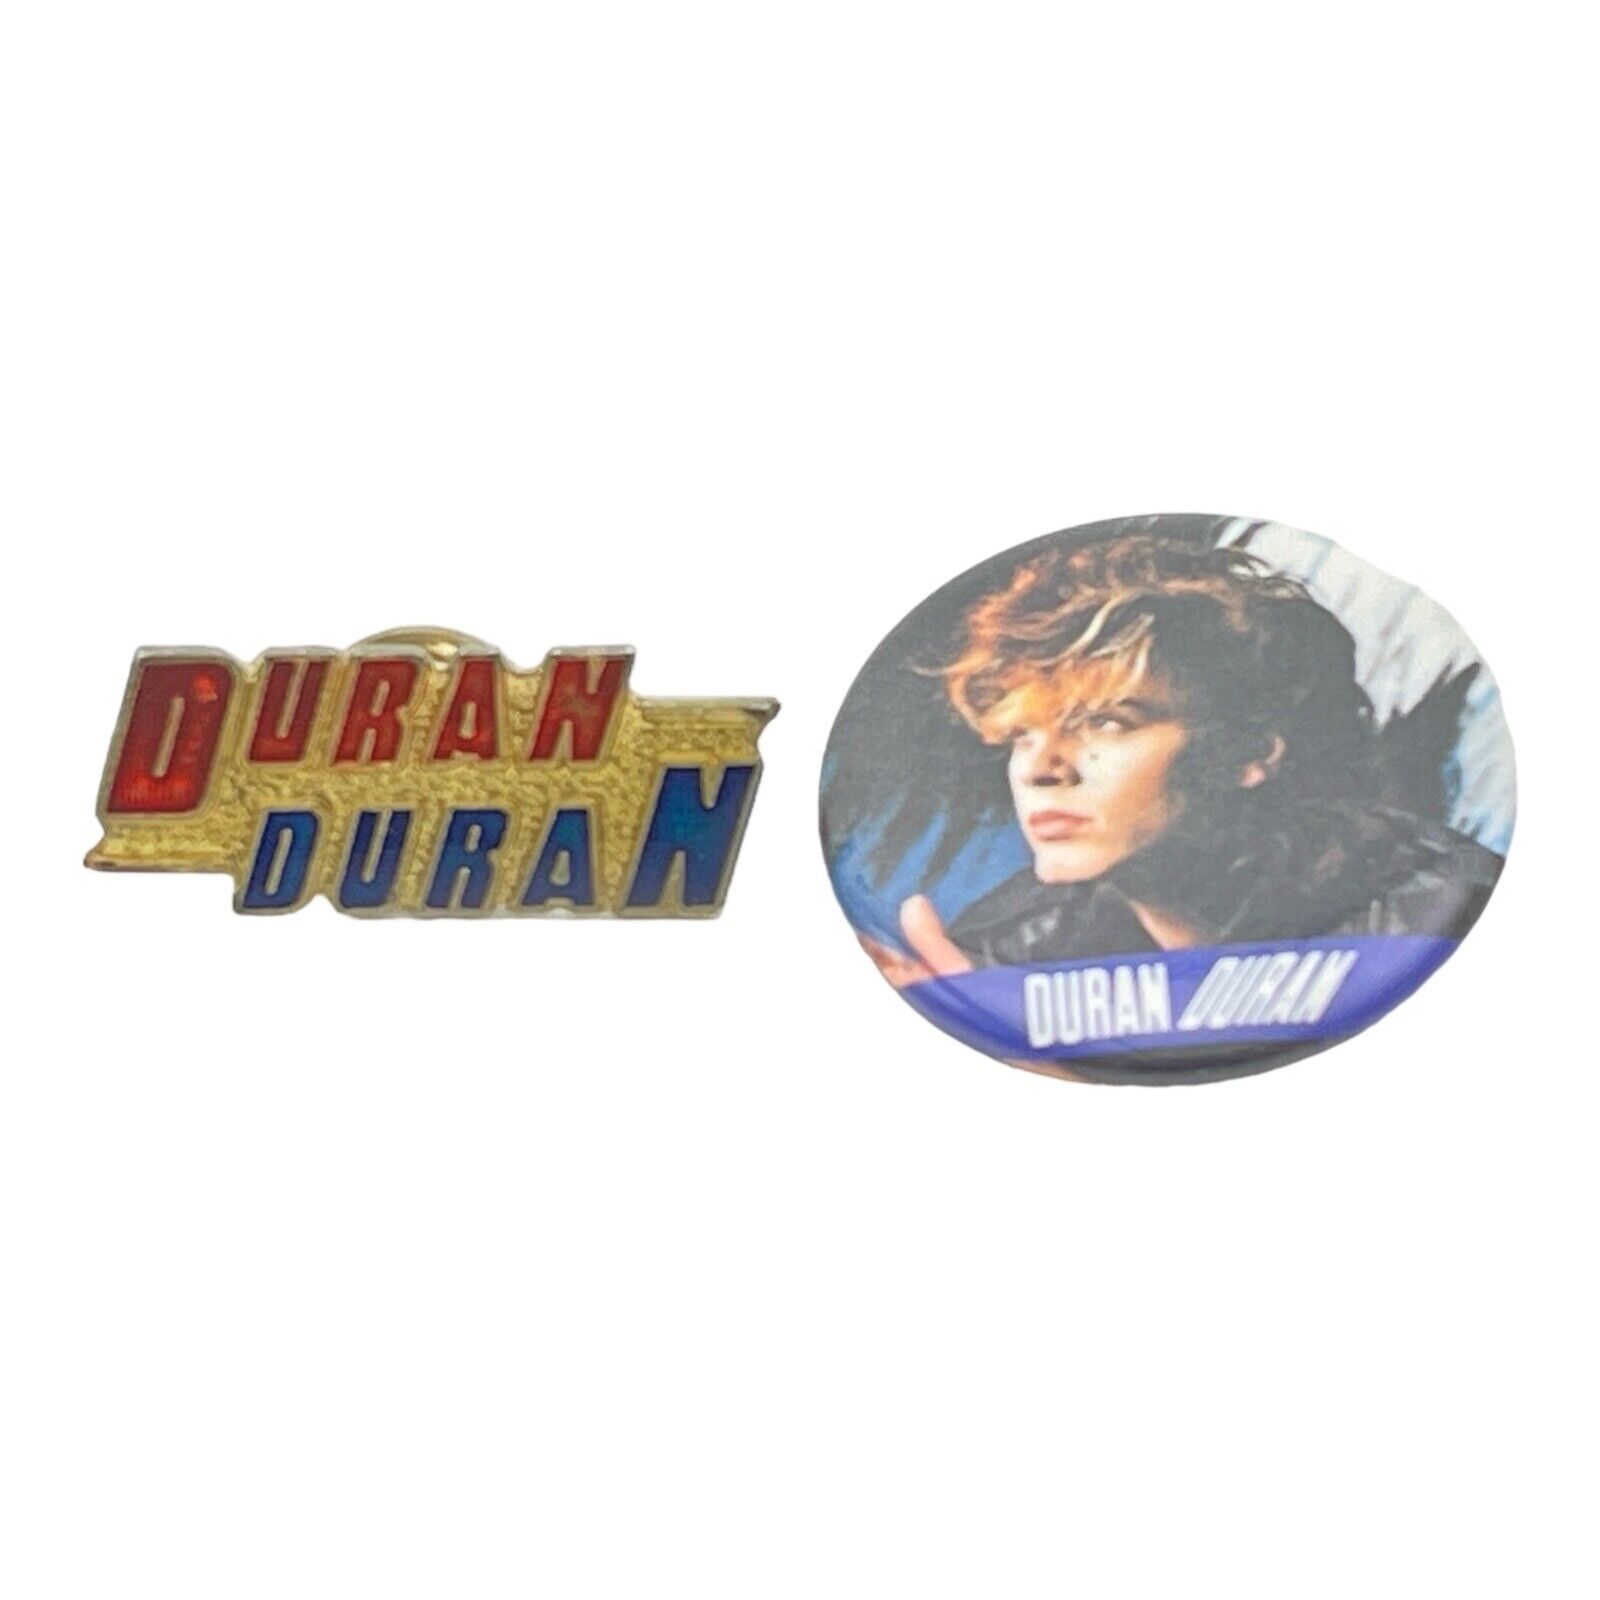 Vintage 80s Duran Duran Music Pin Button Lot of 2